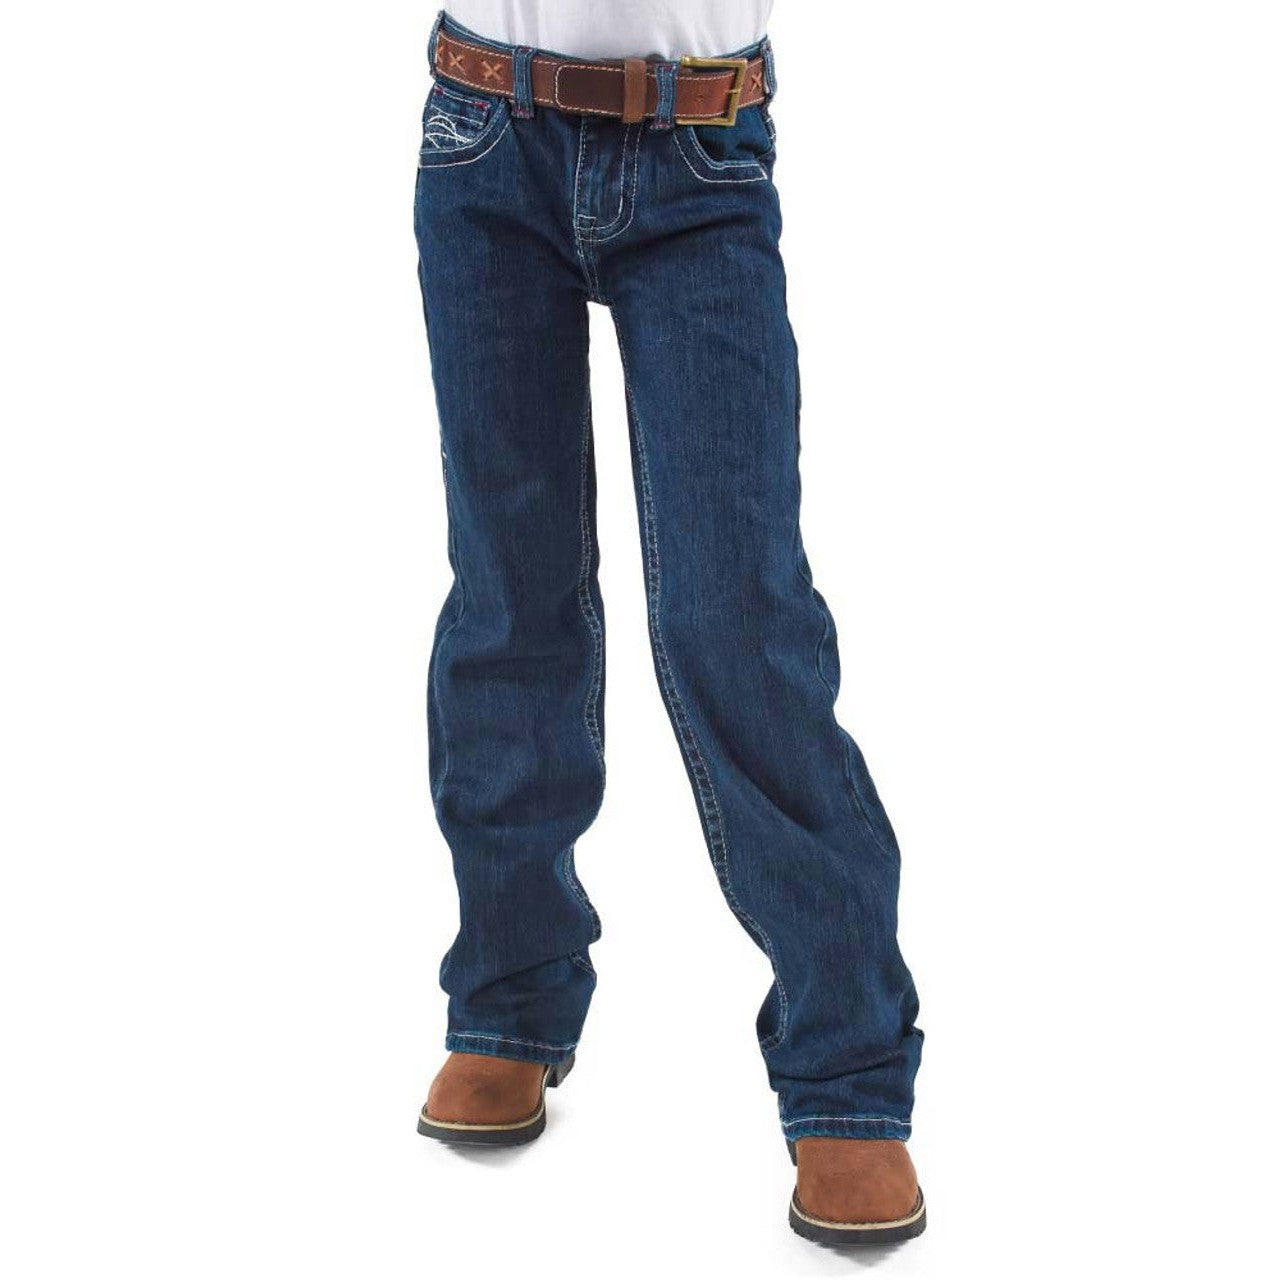 Cowgirl Tuff Girl's Freedom Jeans - Medium Wash